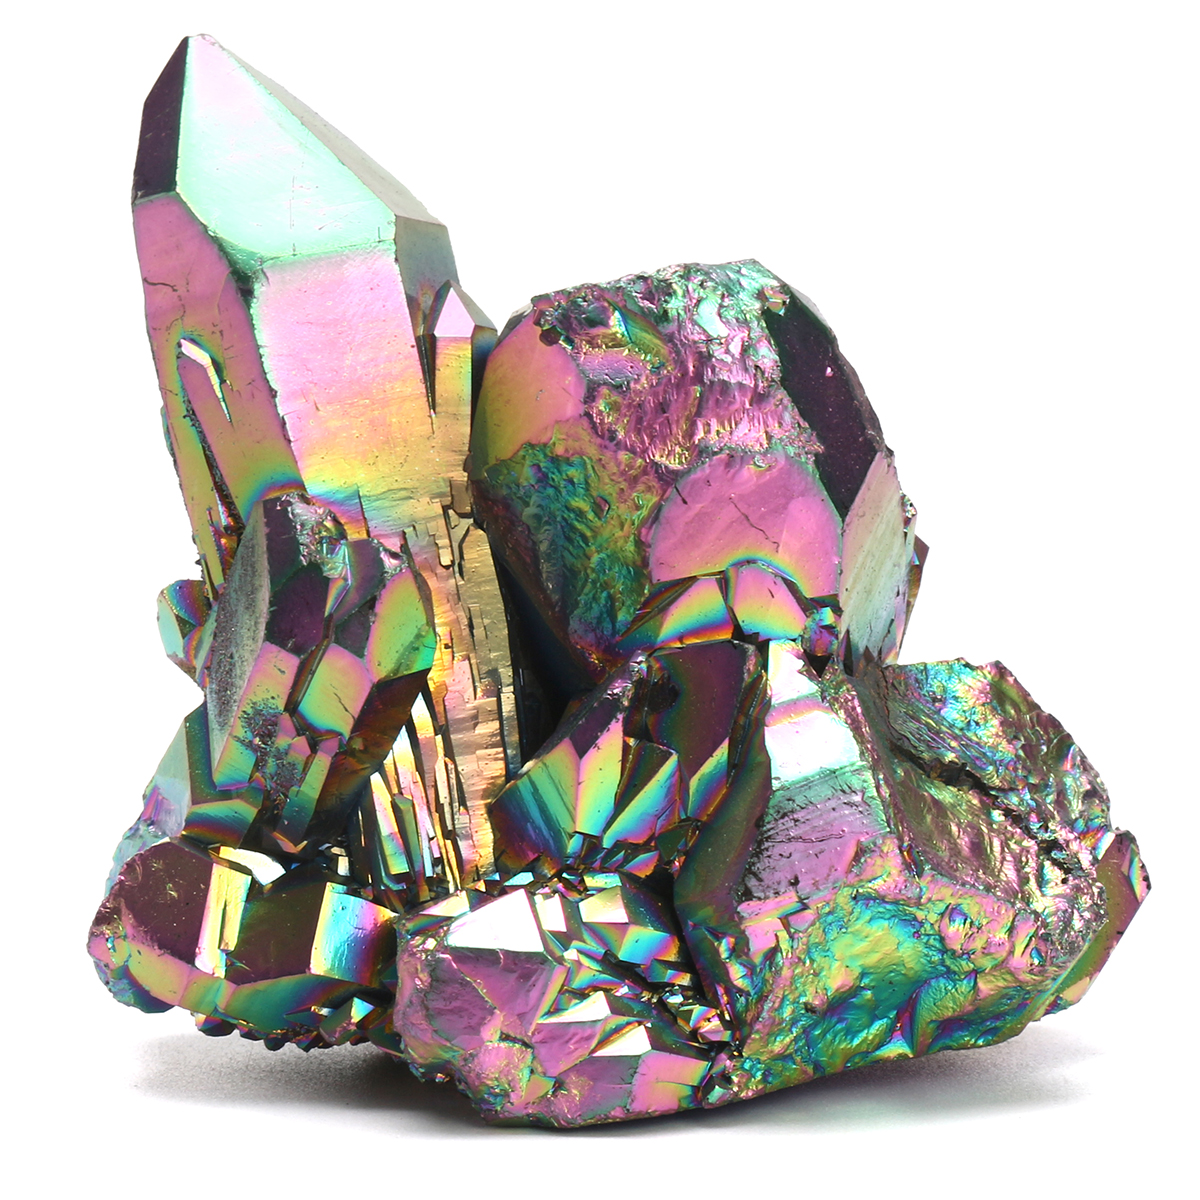 

Rainbow Titanium Coated Drusy Quartz Crystals Geode Gemstone Mineral Rocks Decorations